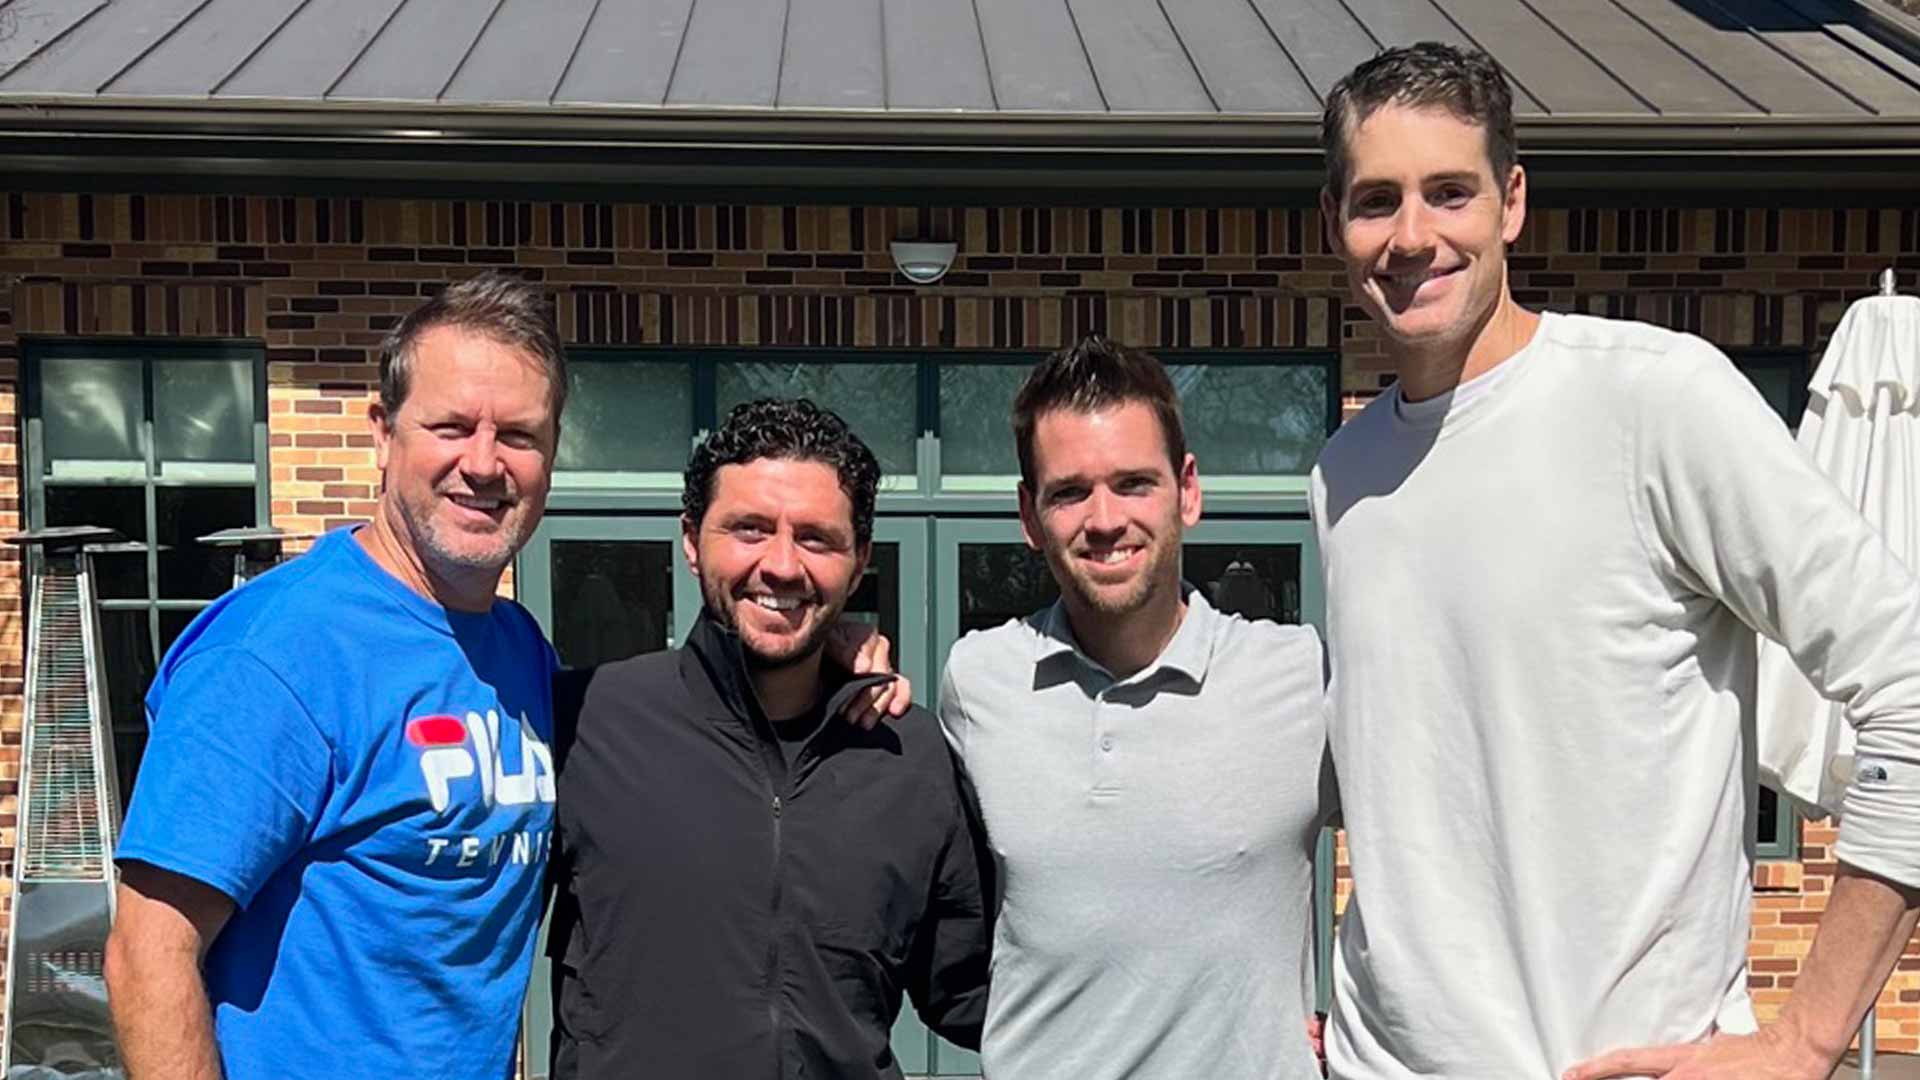 Philip Farmer and the three ATP Tour player he coaches: Hans Hach Verdugo, Austin Krajicek and John Isner.